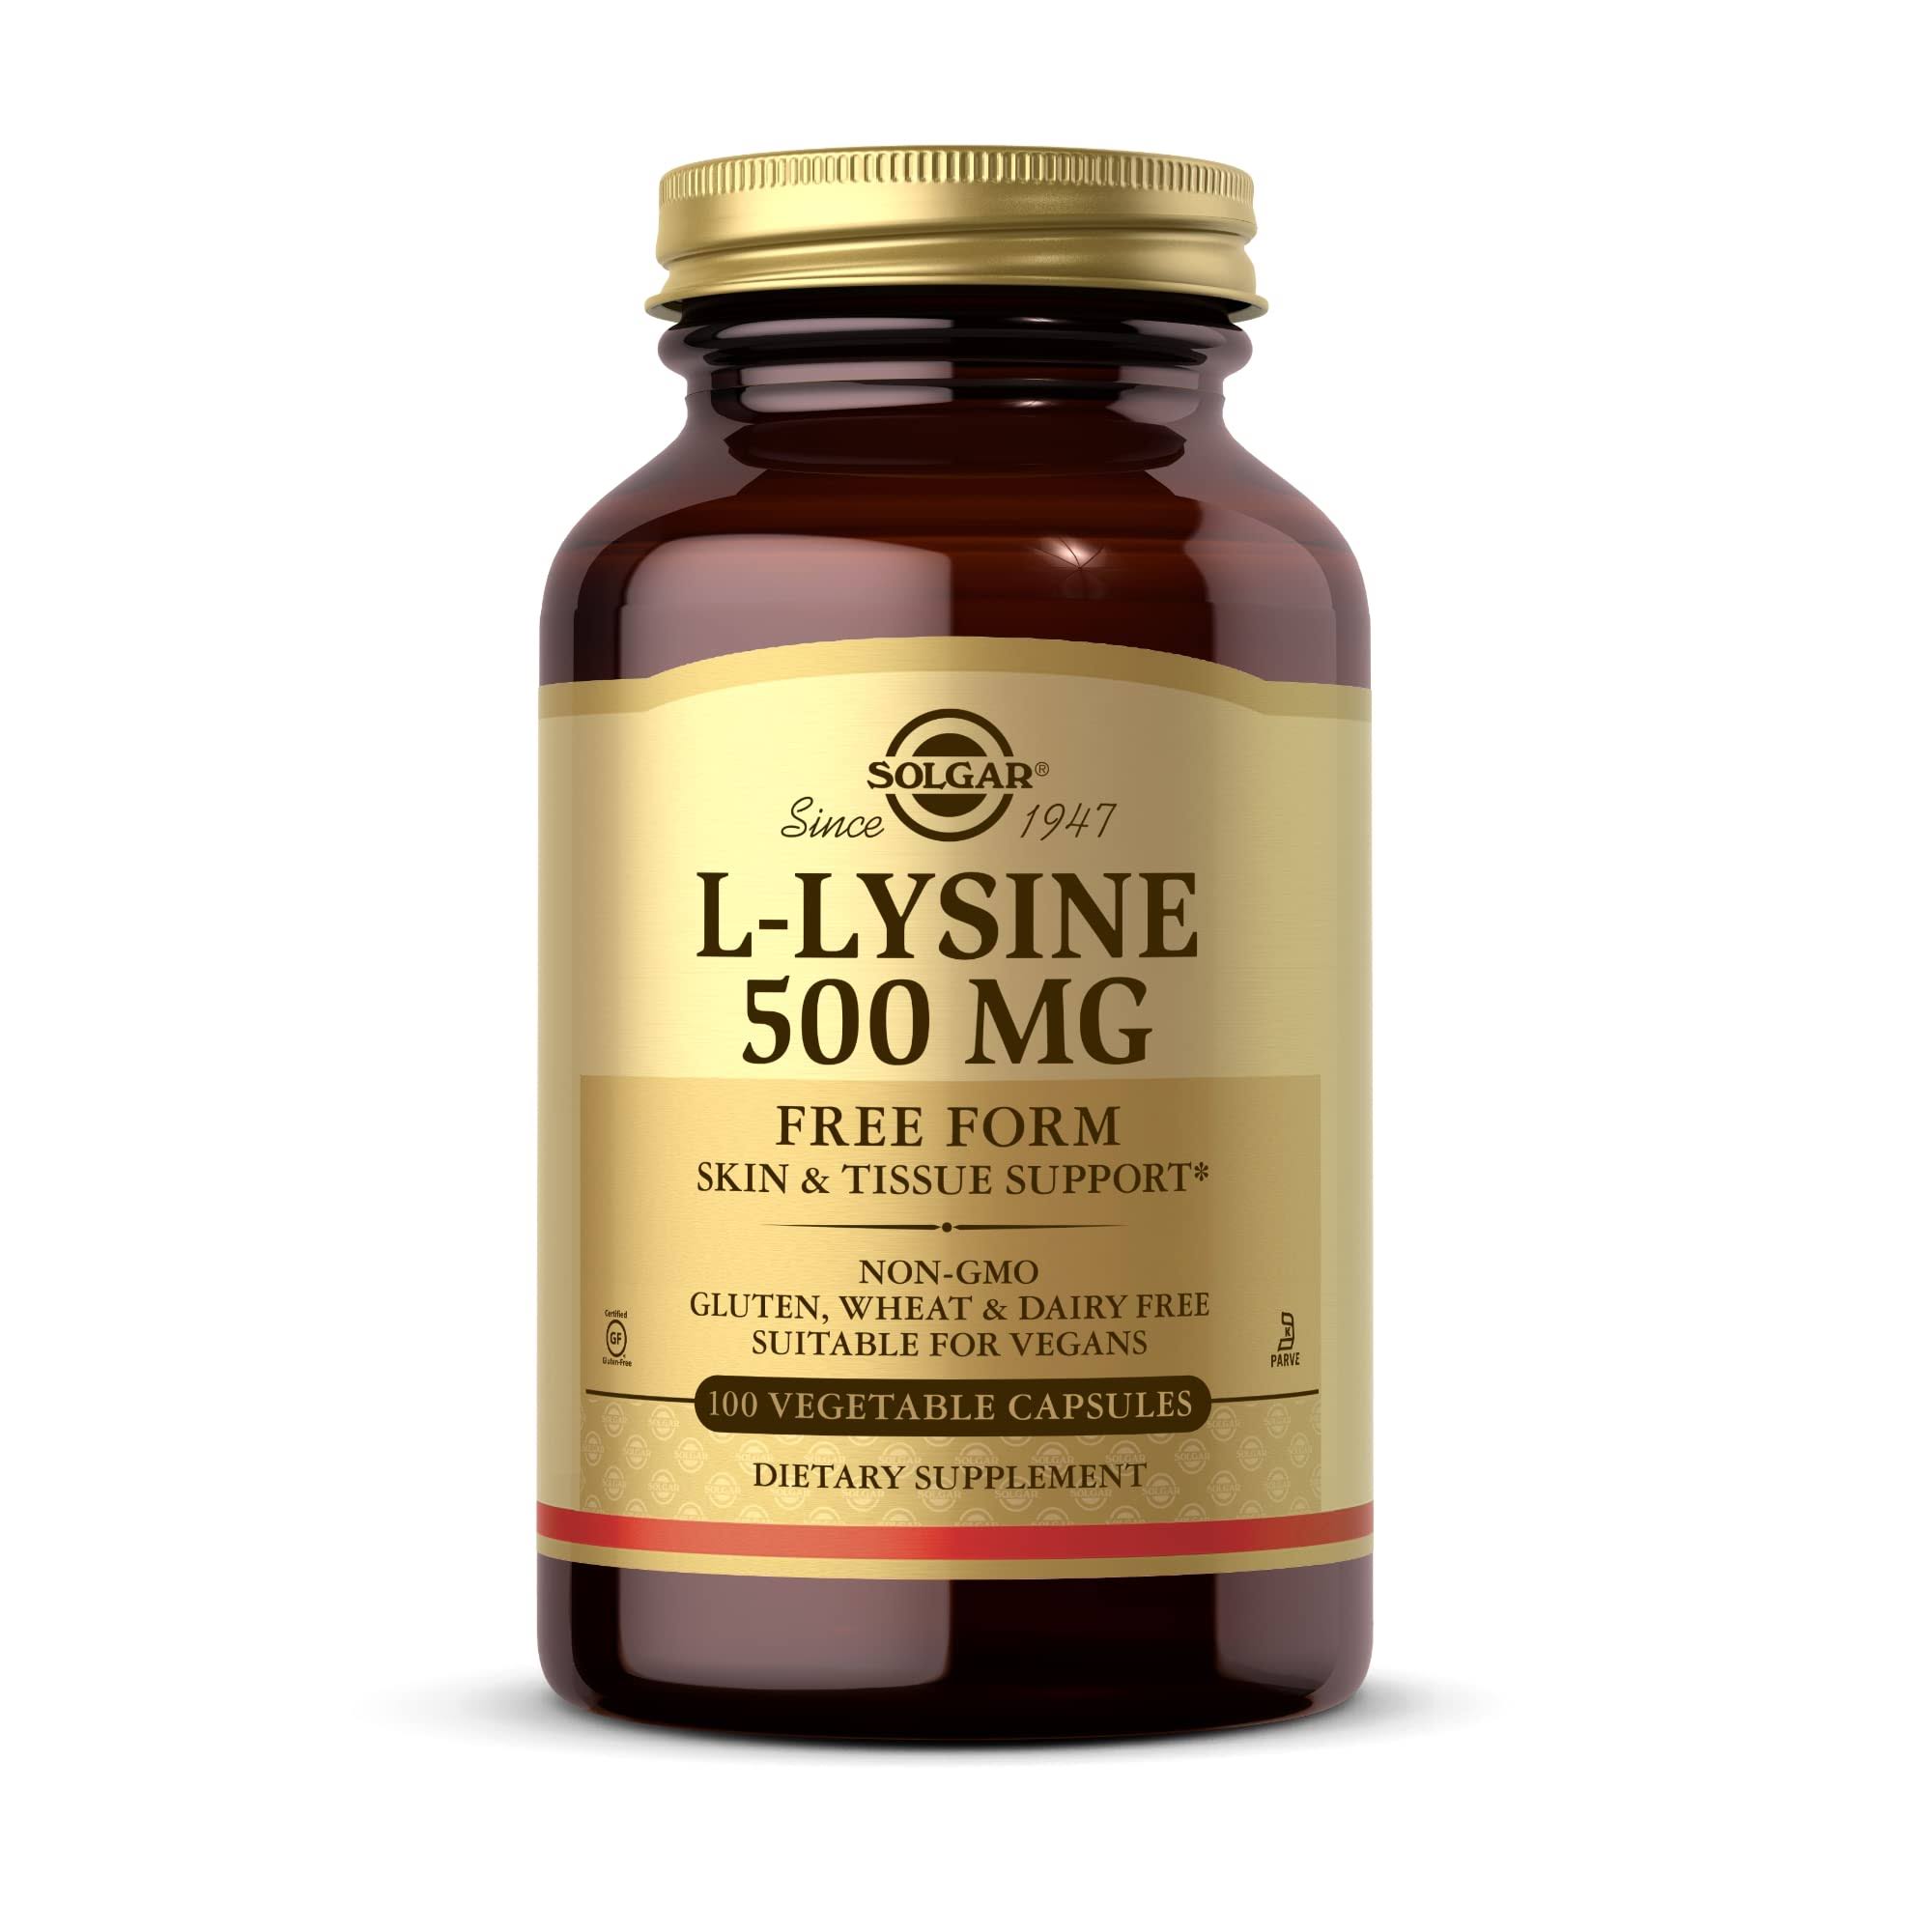 Solgar L-Lysine Free Form, Supplement - 500mg, 100 Vegetable Capsules